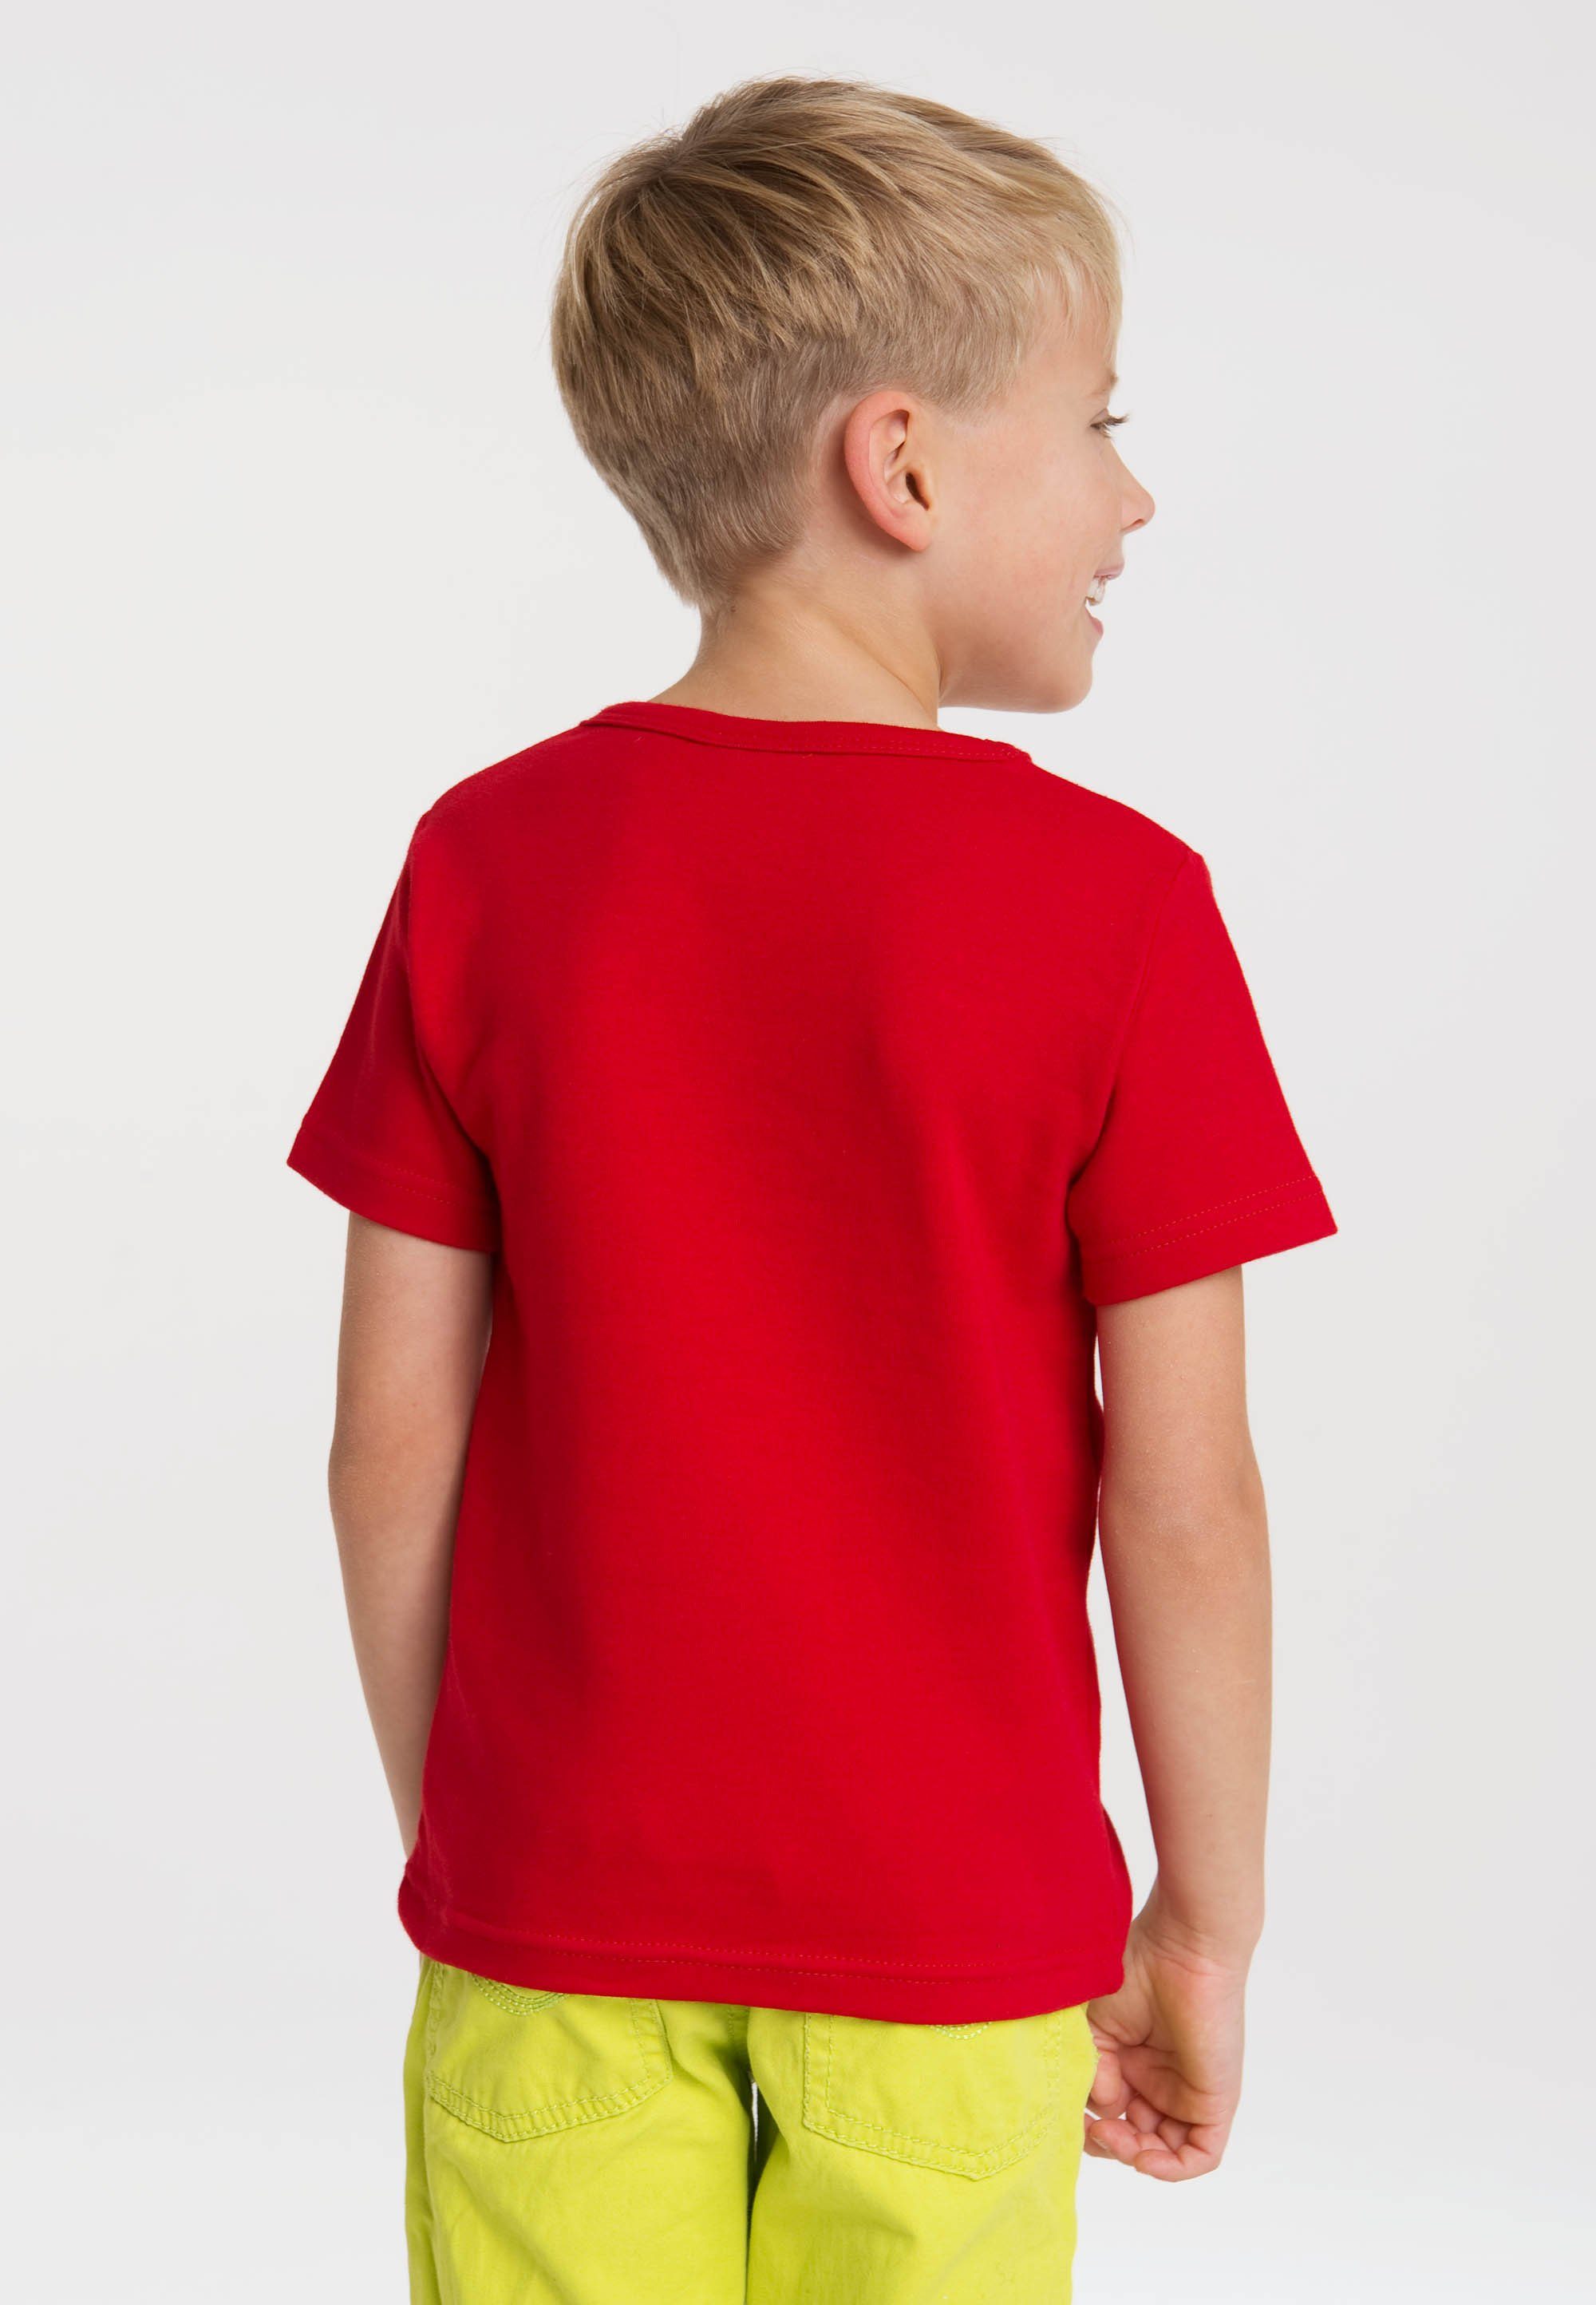 T-Shirt Originaldesign mit Maus lizenziertem Die LOGOSHIRT rot